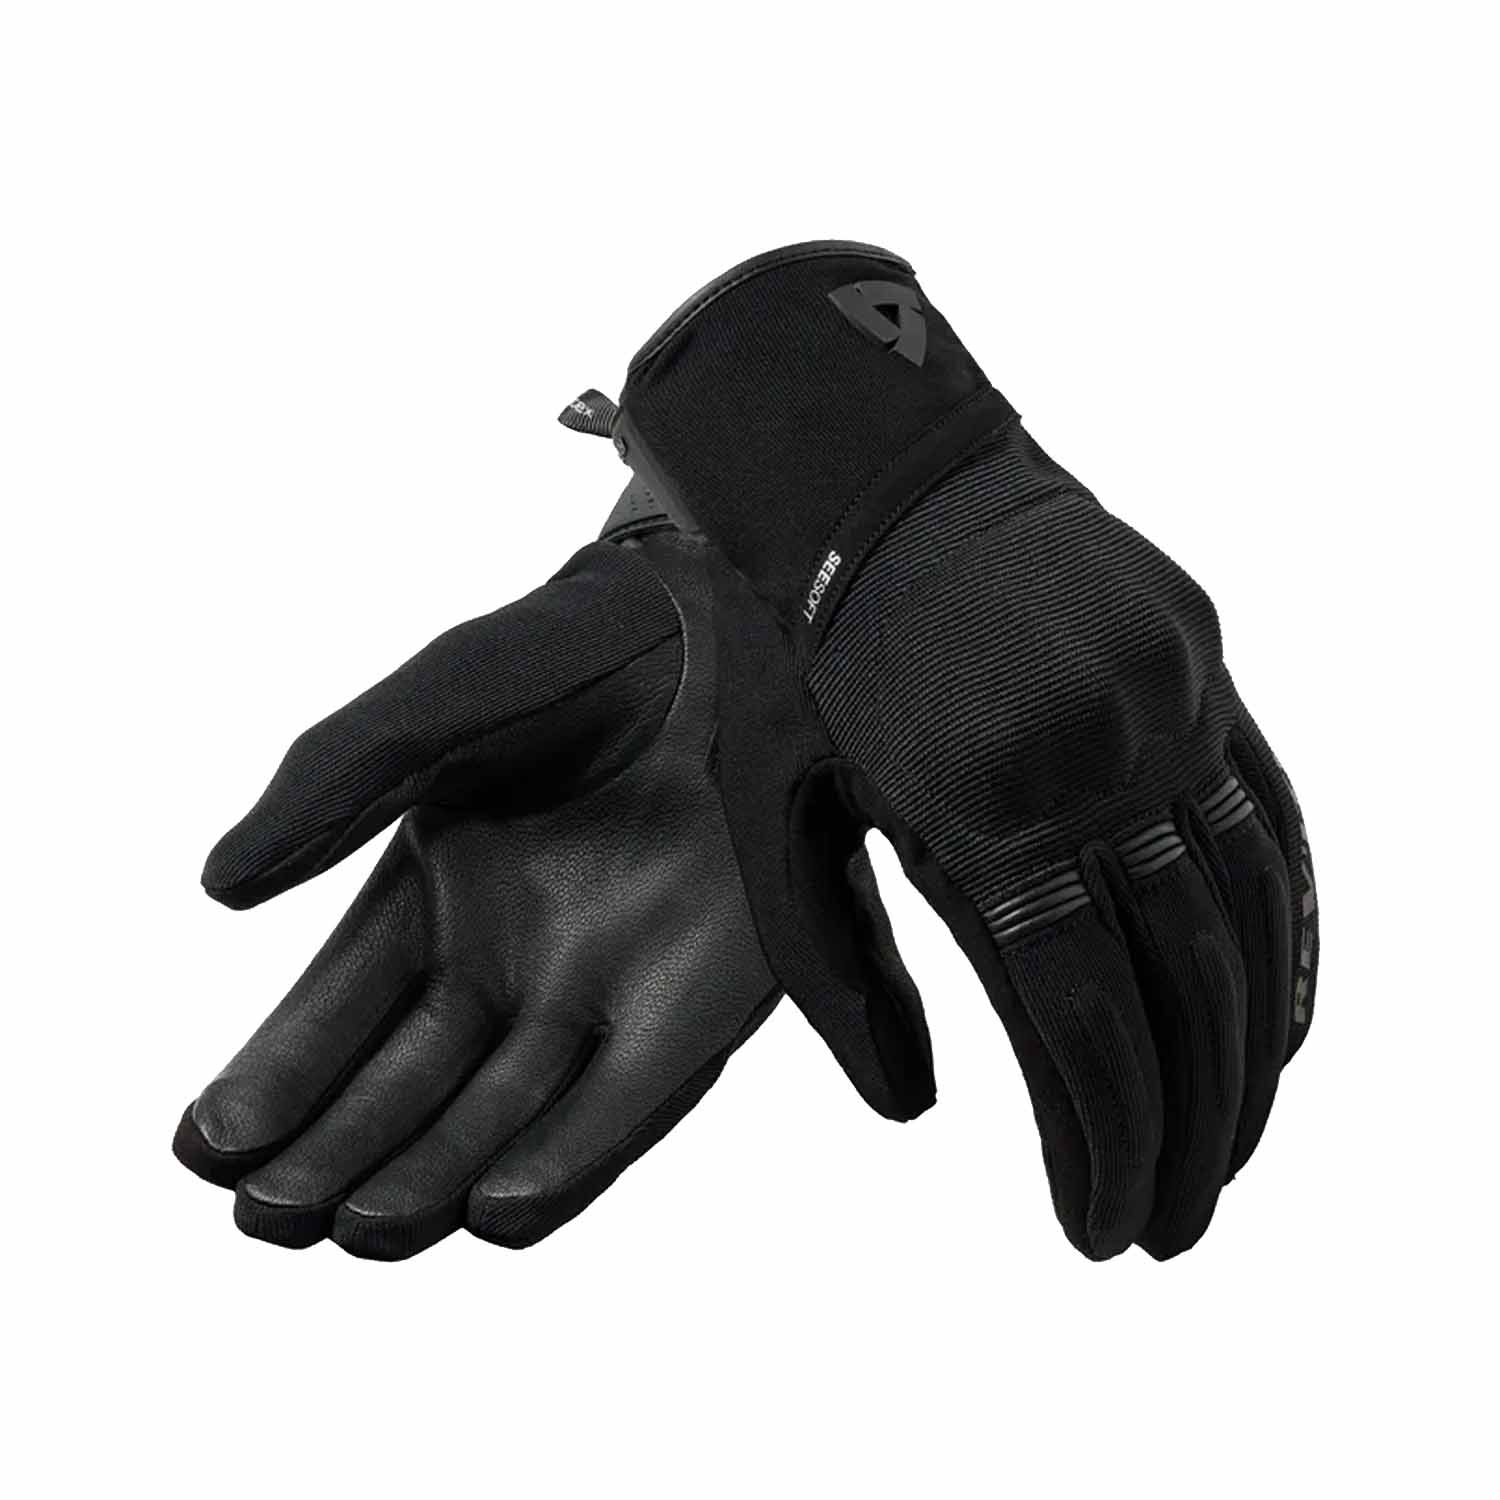 Image of REV'IT! Mosca 2 H2O Gloves Ladies Black Size M EN